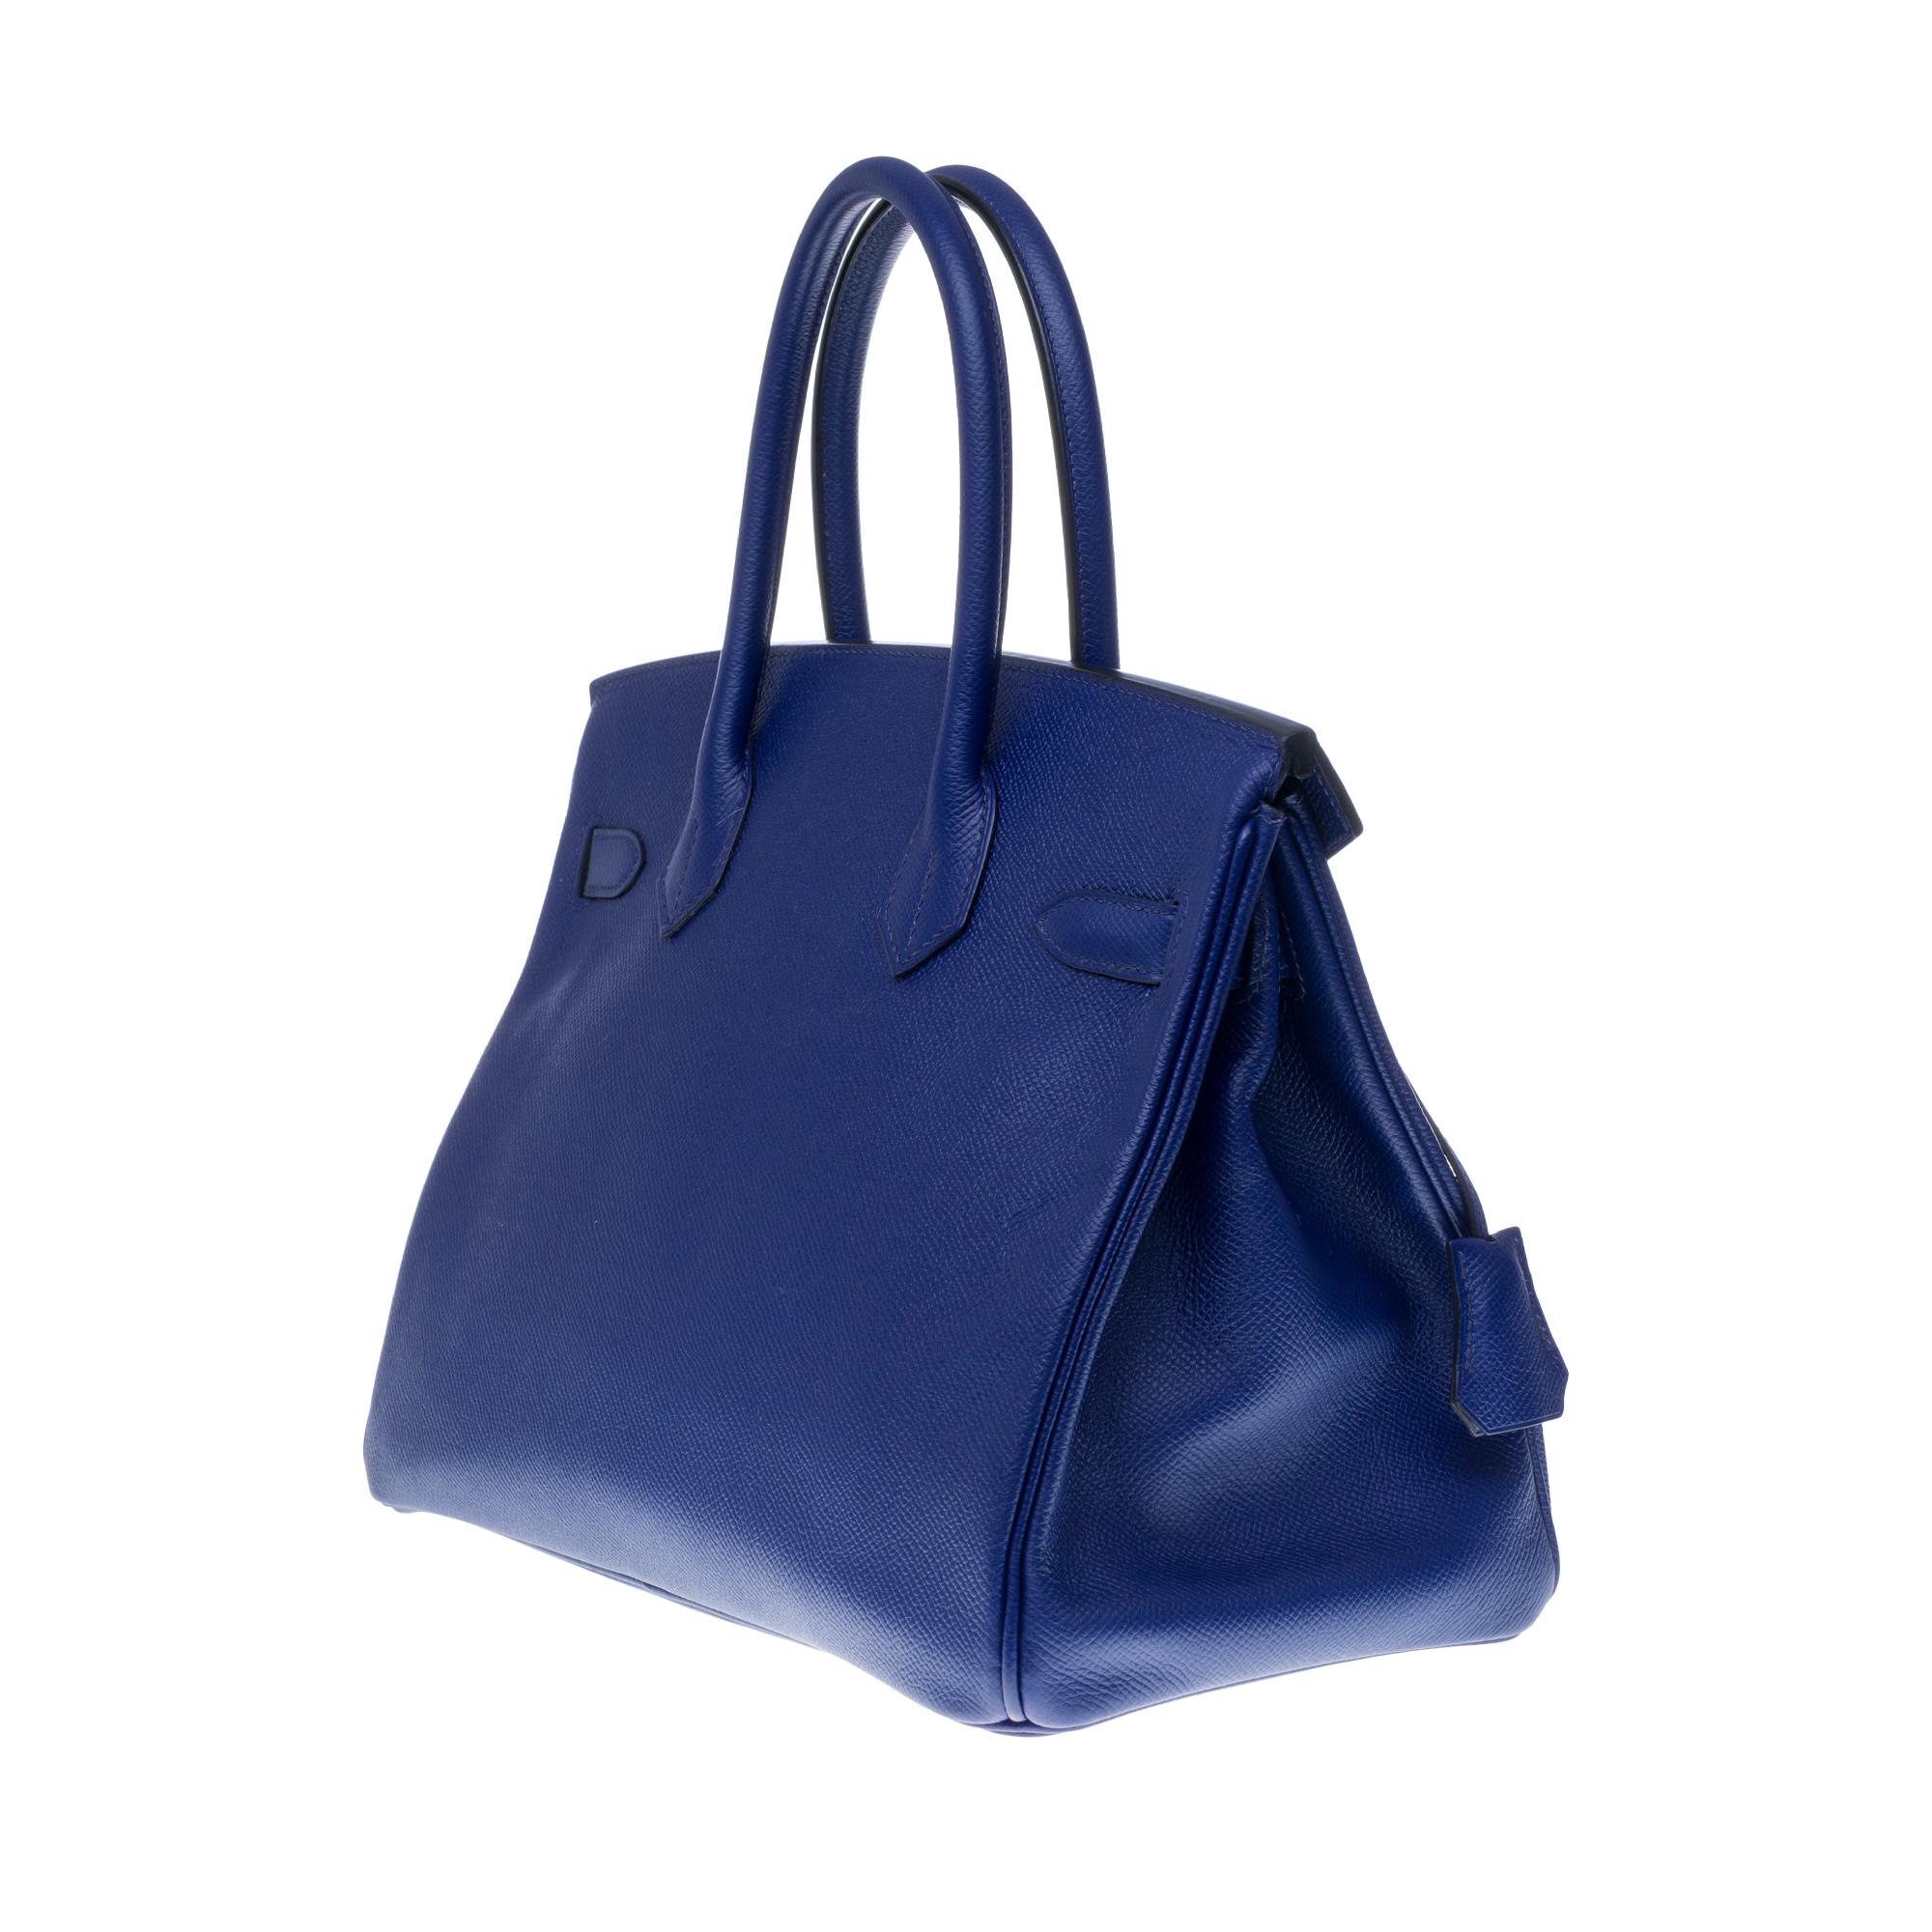 Women's Almost New - Hermès Birkin 30 handbag in Blue Encre Epsom leather, gold hardware